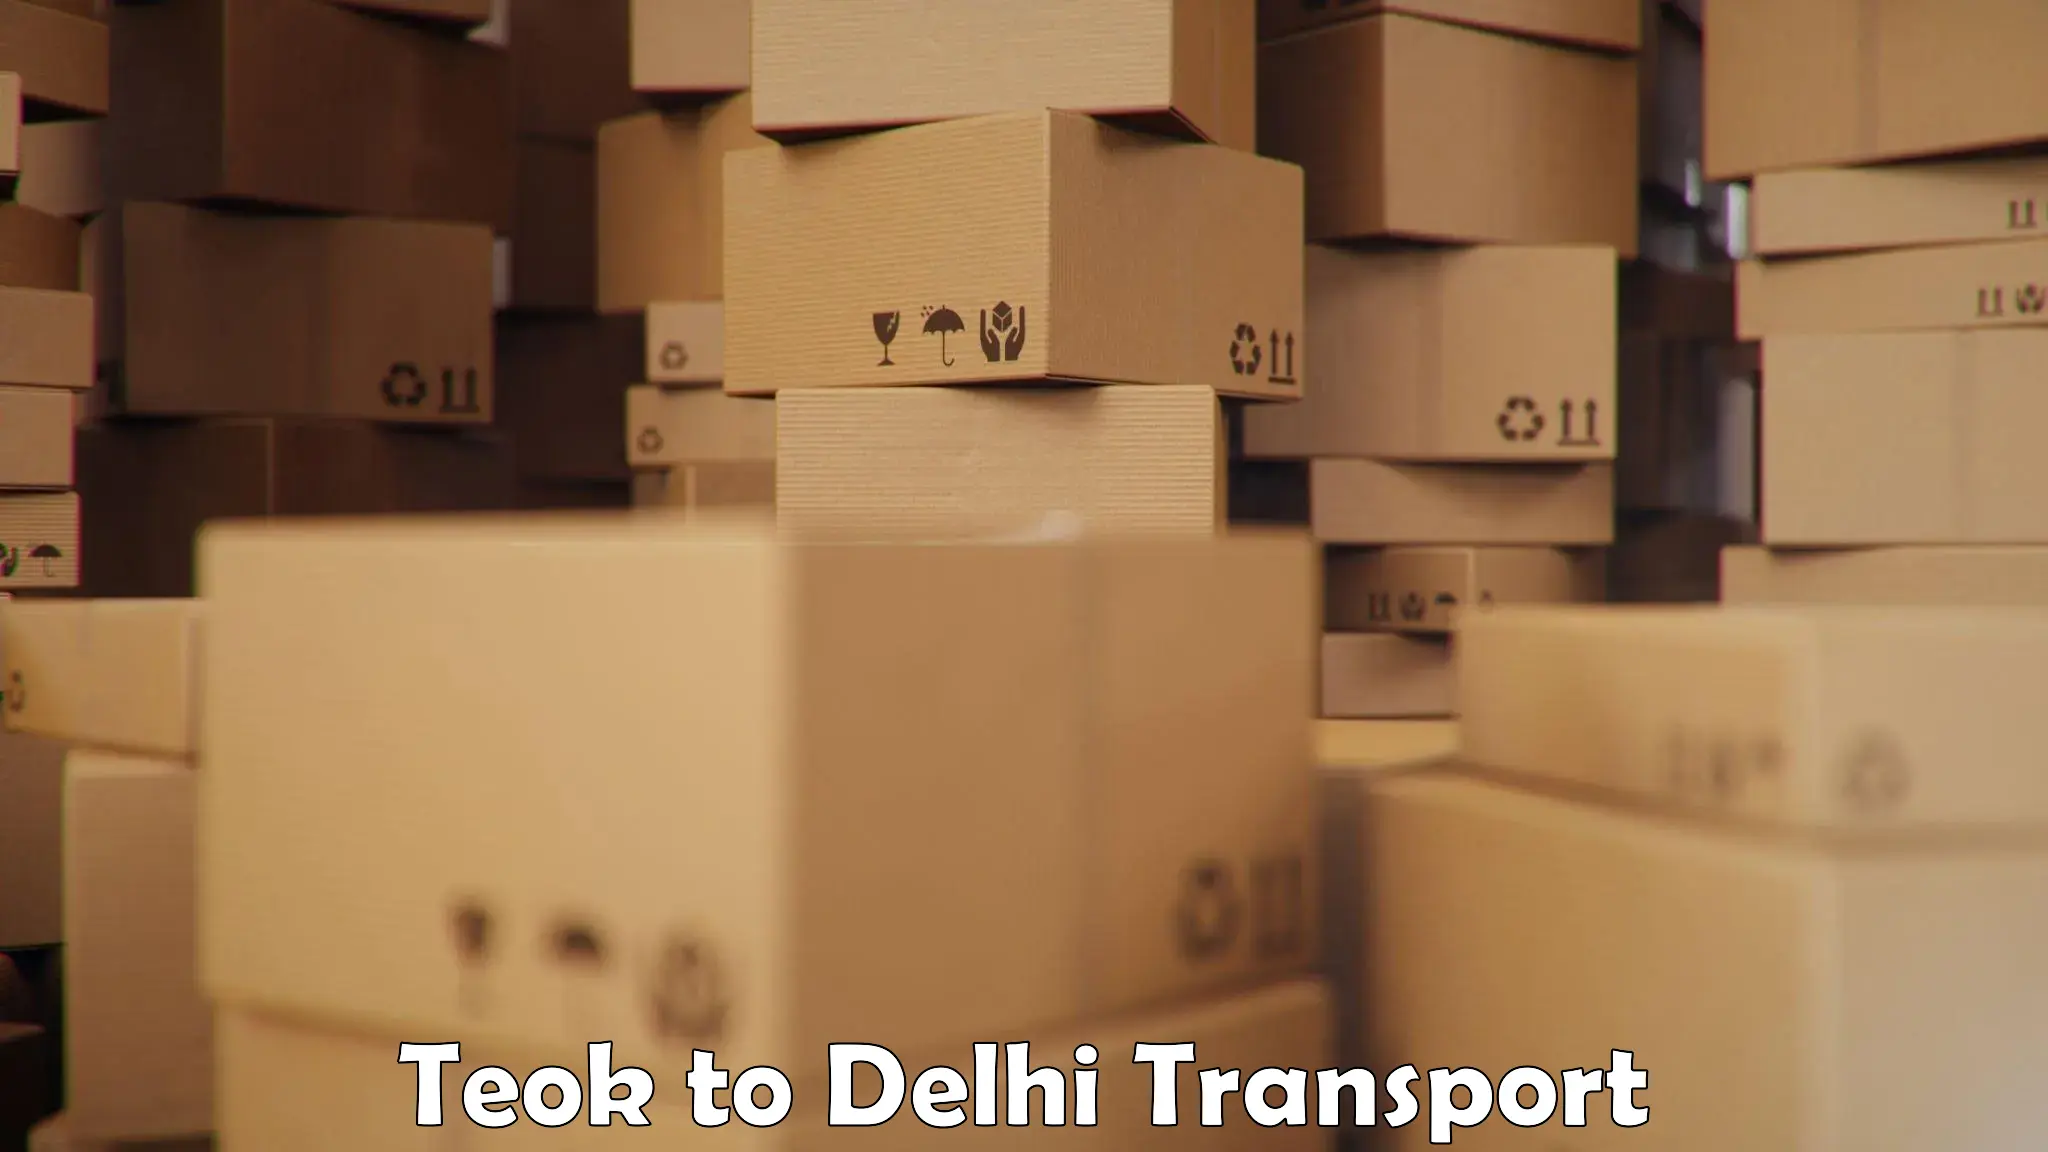 Goods delivery service Teok to Delhi